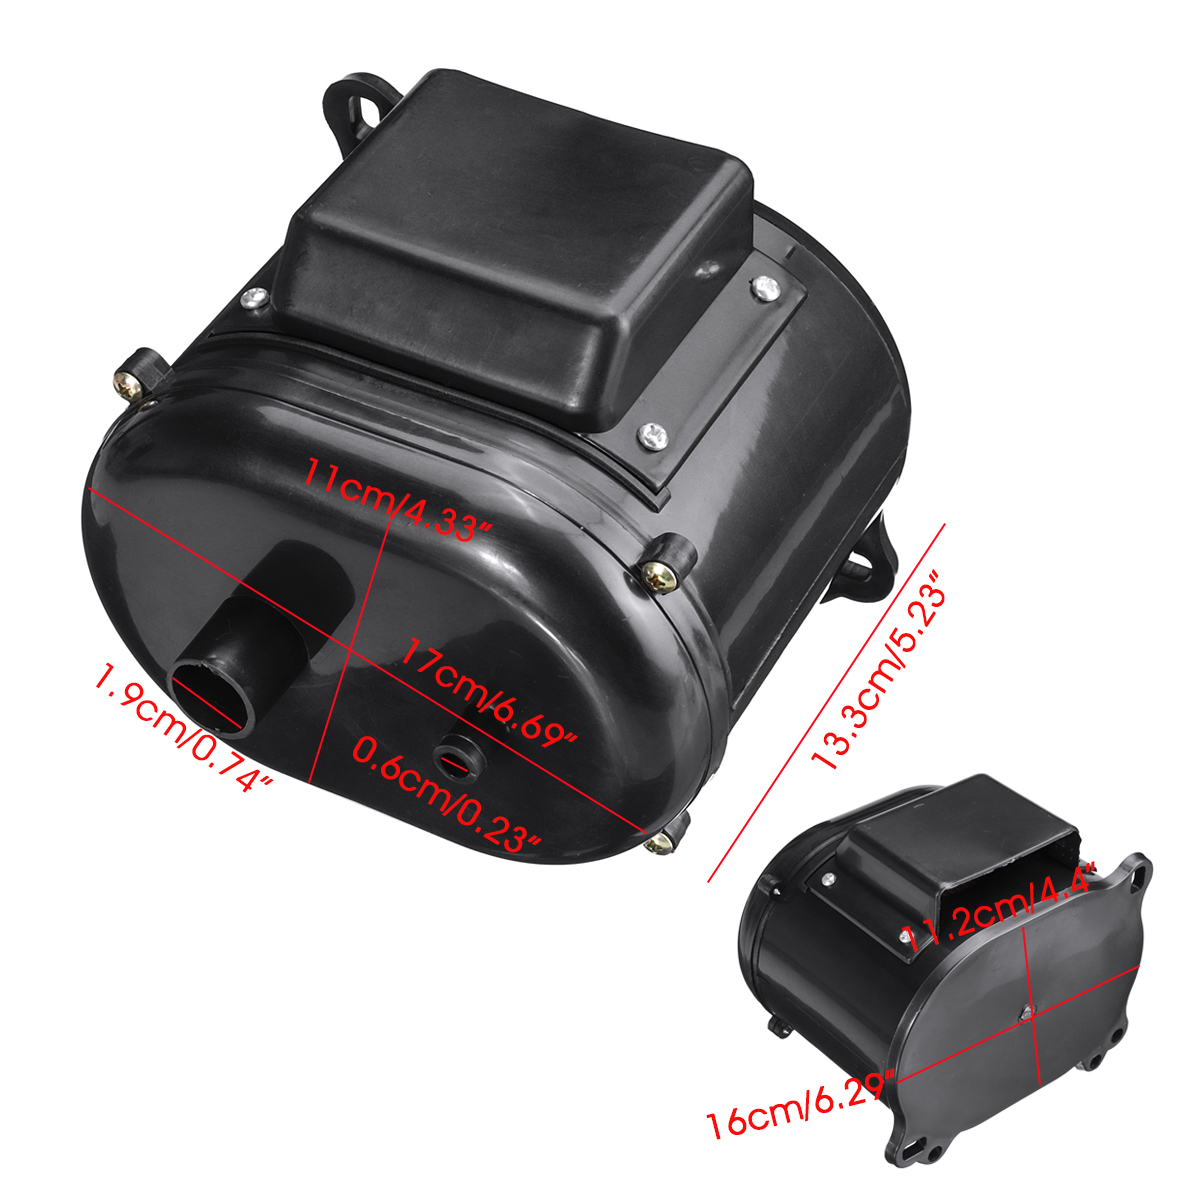 25mm-Heater-Air-Intake-Filter-Silencer-For-Dometic-Eberspacher-Webasto-Diesel-Heater-1595035-3